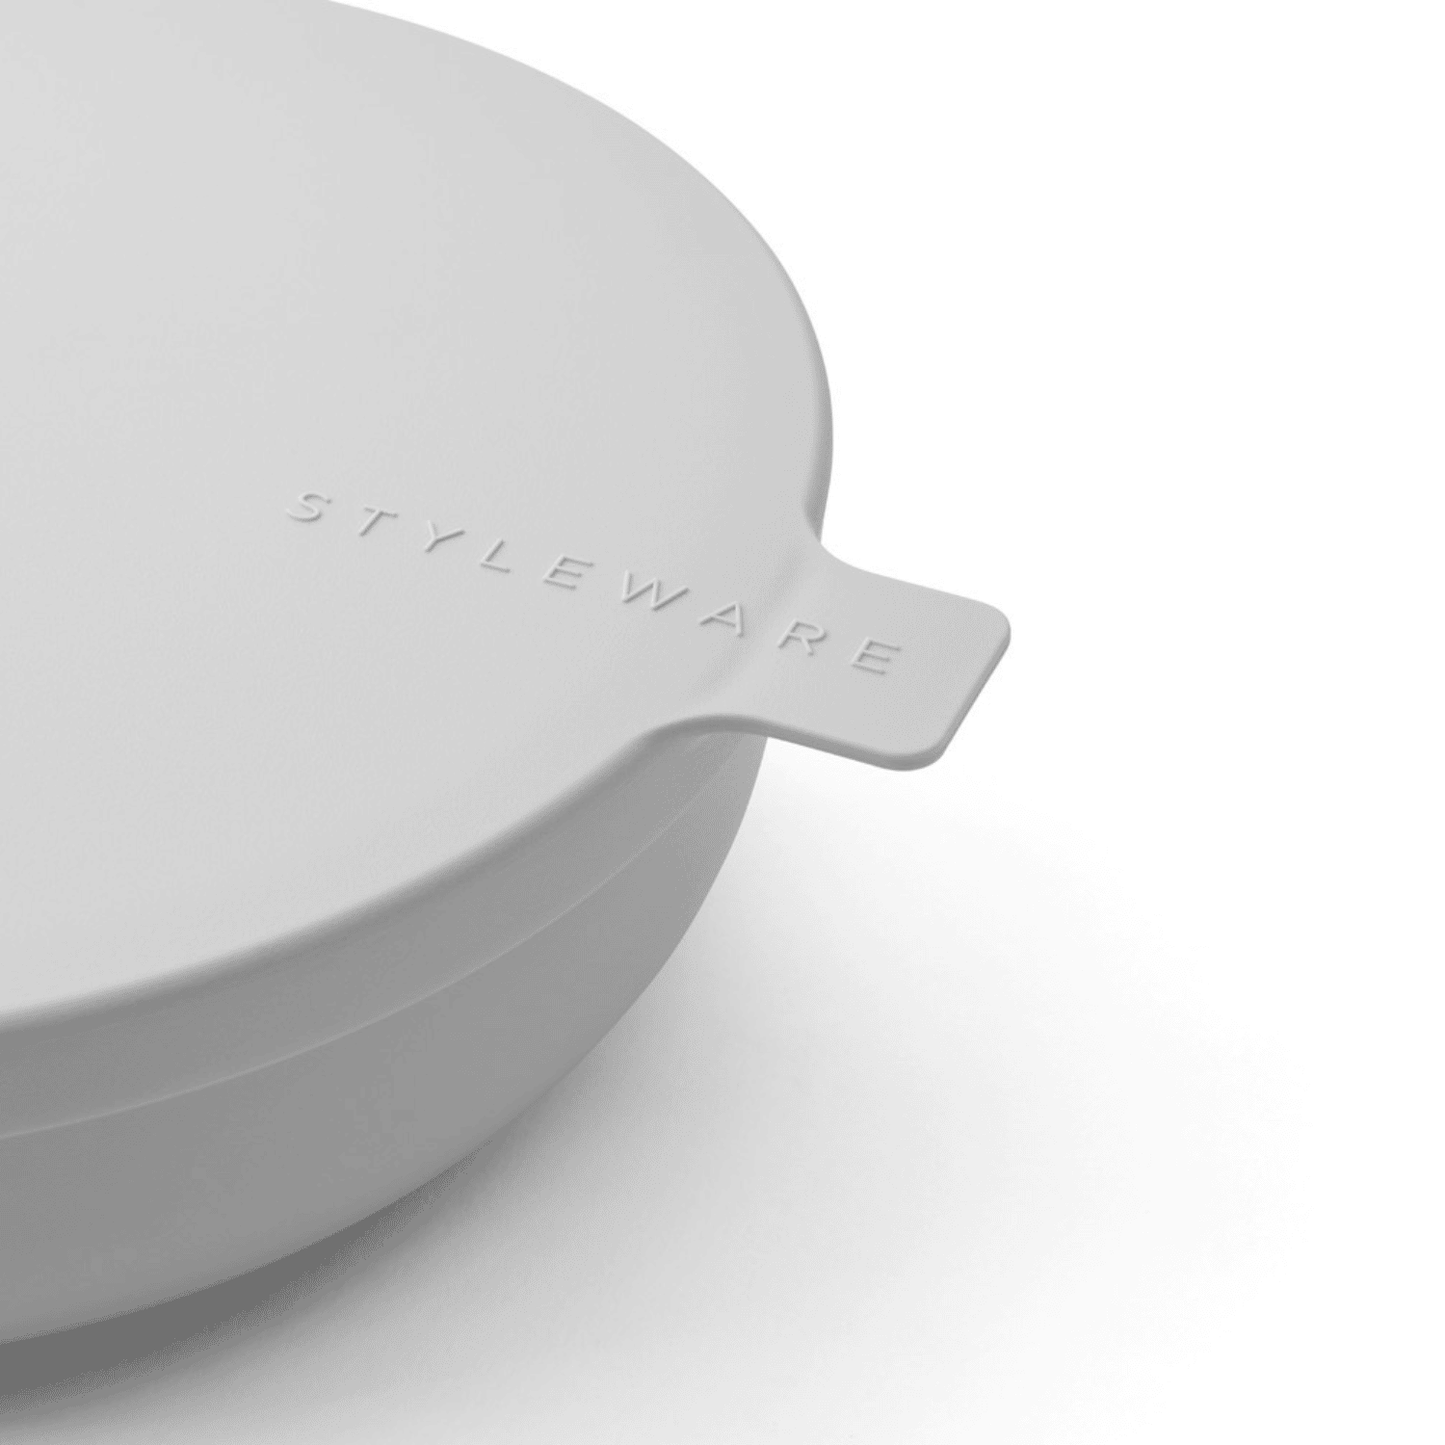 Styleware - Nesting Bowls Smoke